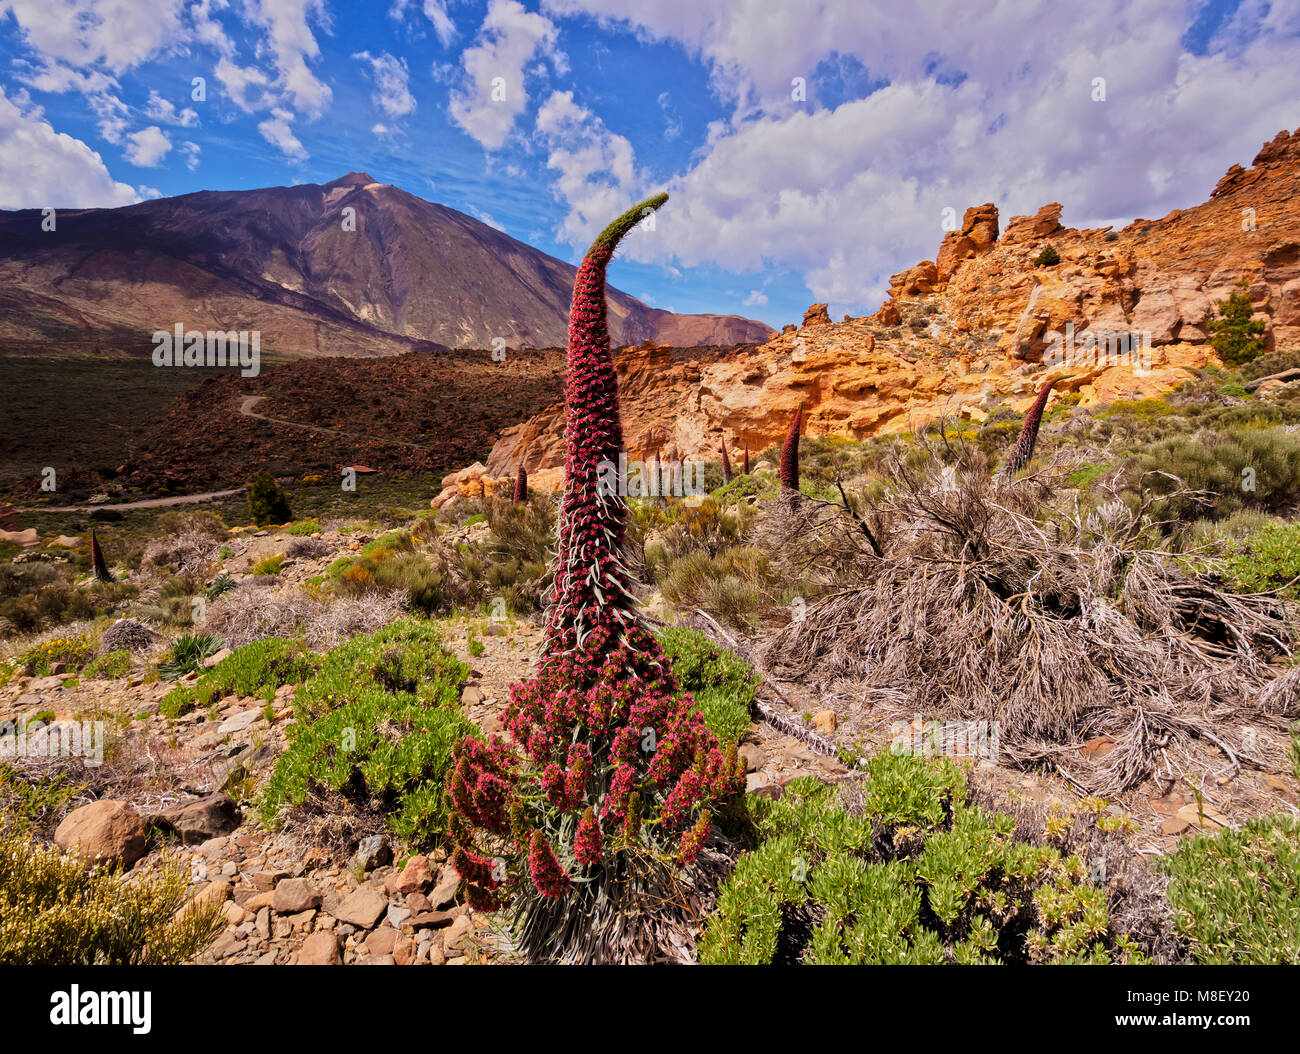 Tajinaste Rojo(Echium Wildpretii), endemic plant, Teide Mountain in the background, Teide National Park, Tenerife Island, Canary Islands, Spain Stock Photo